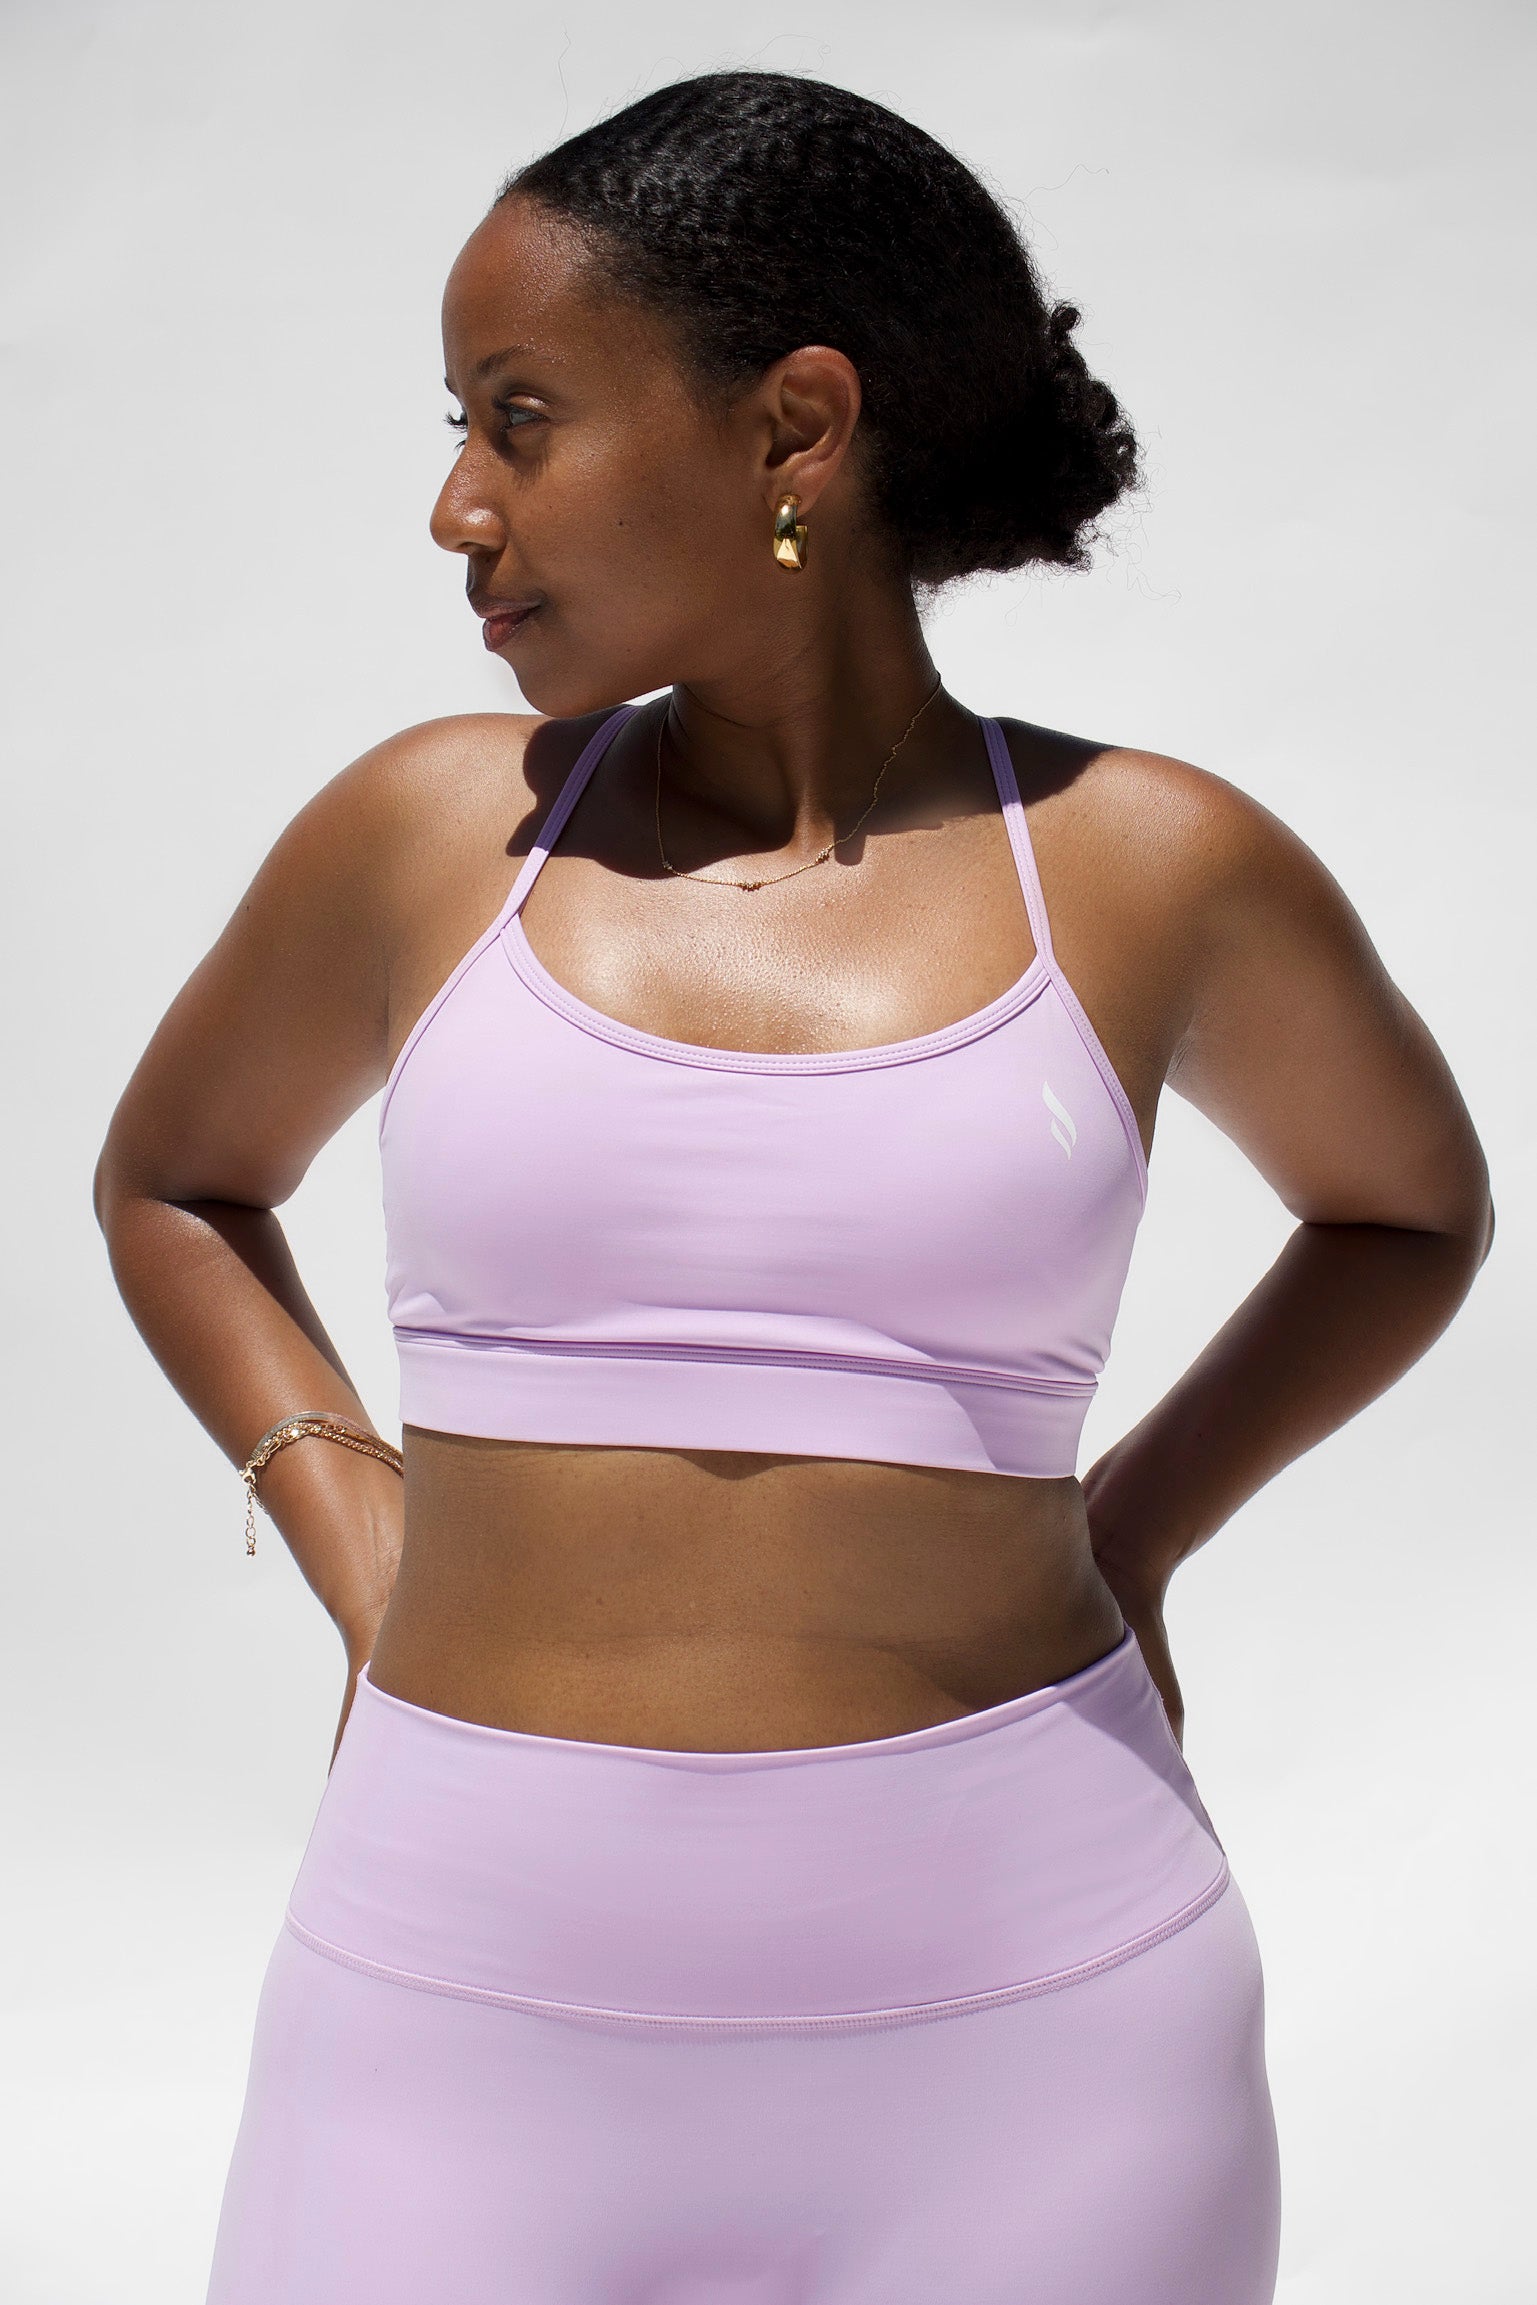 Fleur De Lis Golden Glitter Black Women's Sports Bra Yoga Vest Racerback Bra  Workout Fitness Underwear at  Women's Clothing store